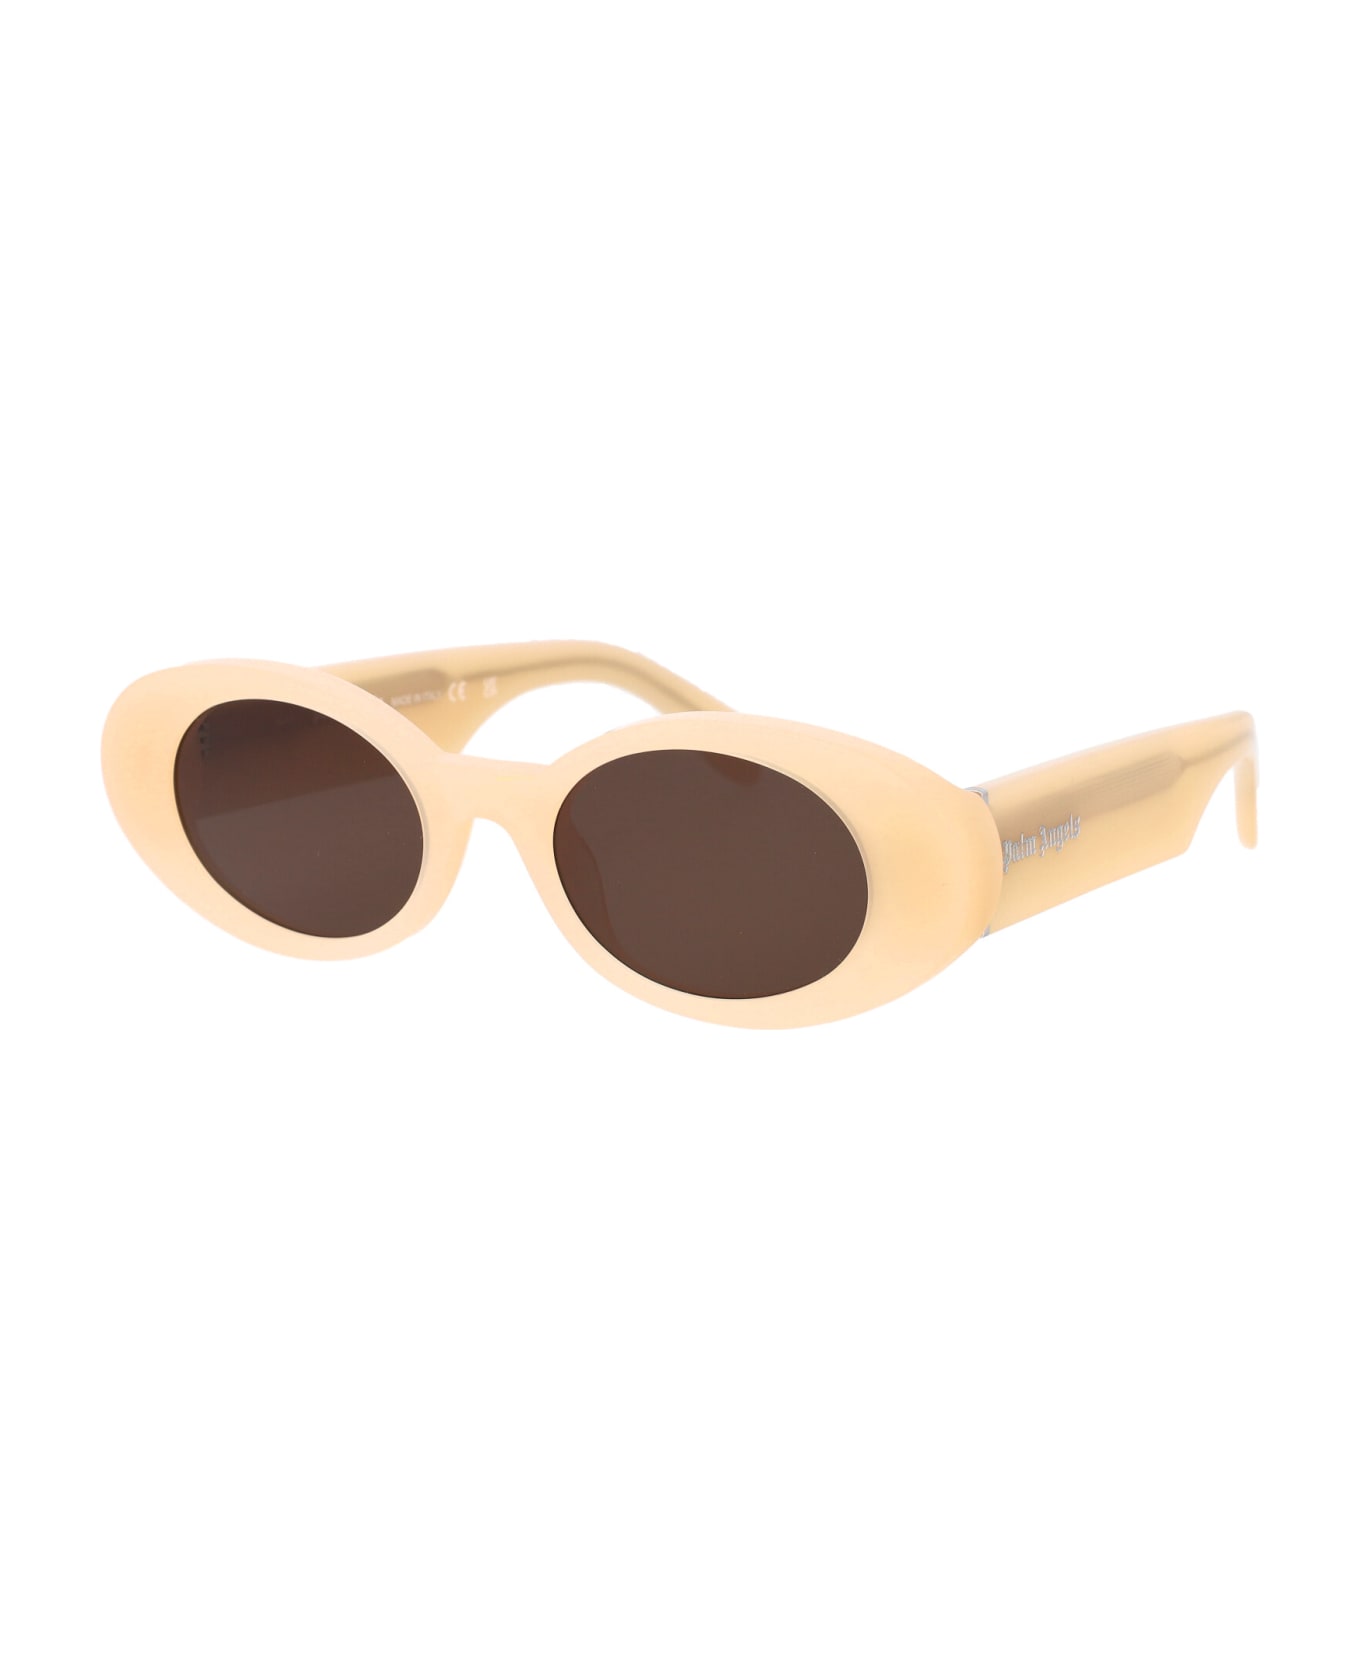 Palm Angels Gilroy Sunglasses - 1764 SAND